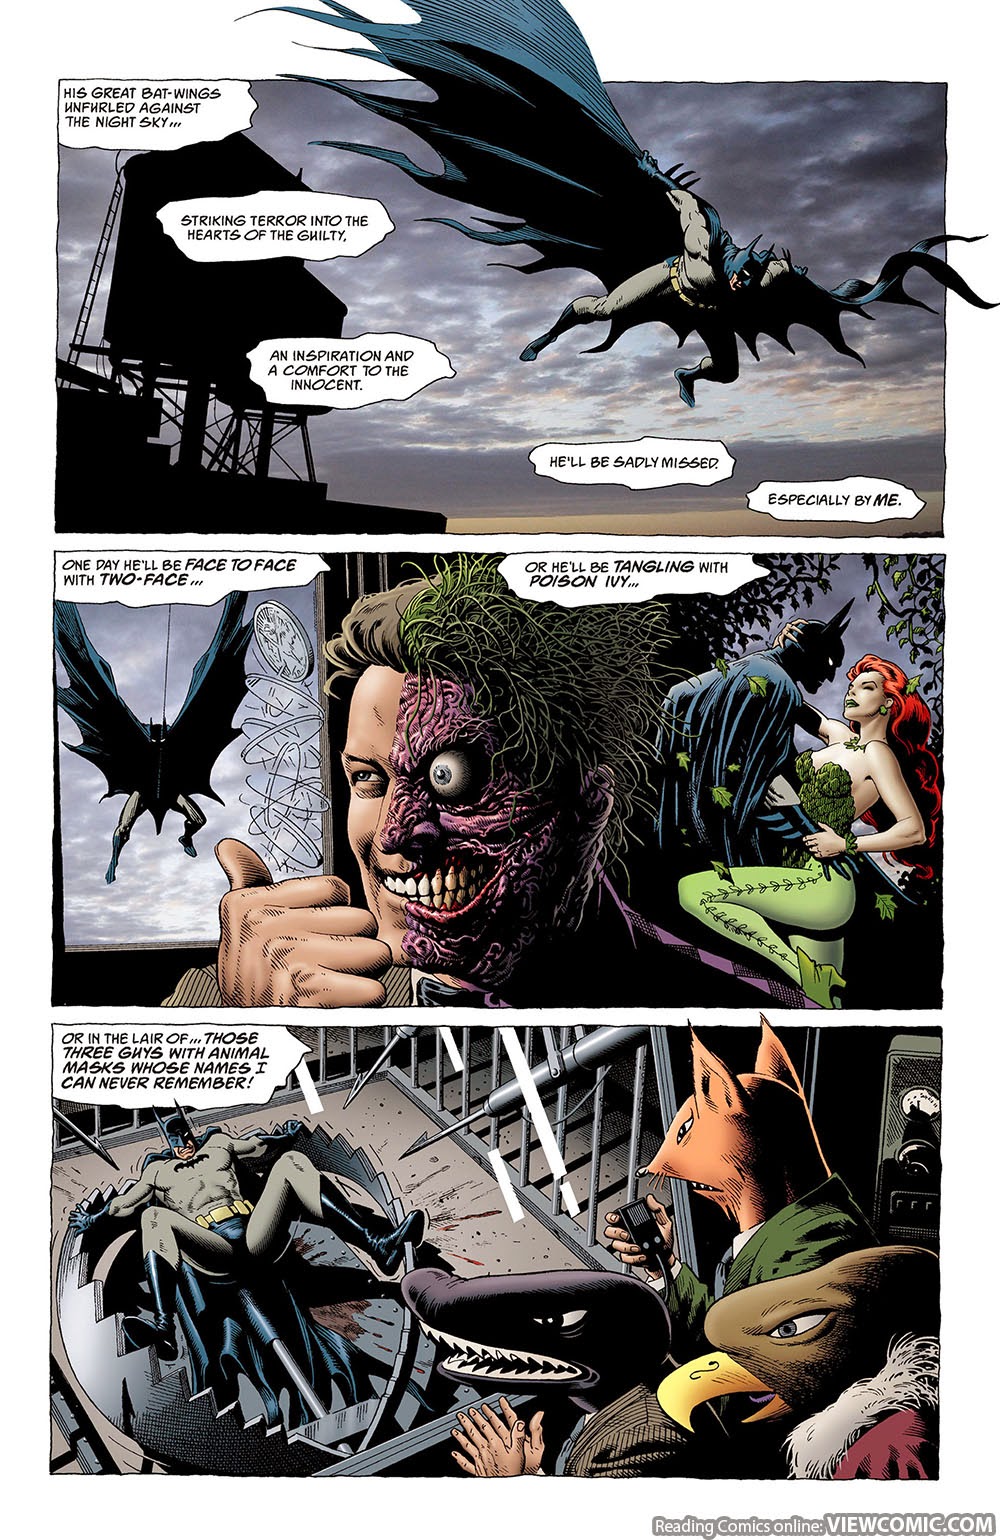 Batman The Killing Joke (1988)â€¦â€¦â€¦â€¦â€¦â€¦ | Viewcomic reading ...